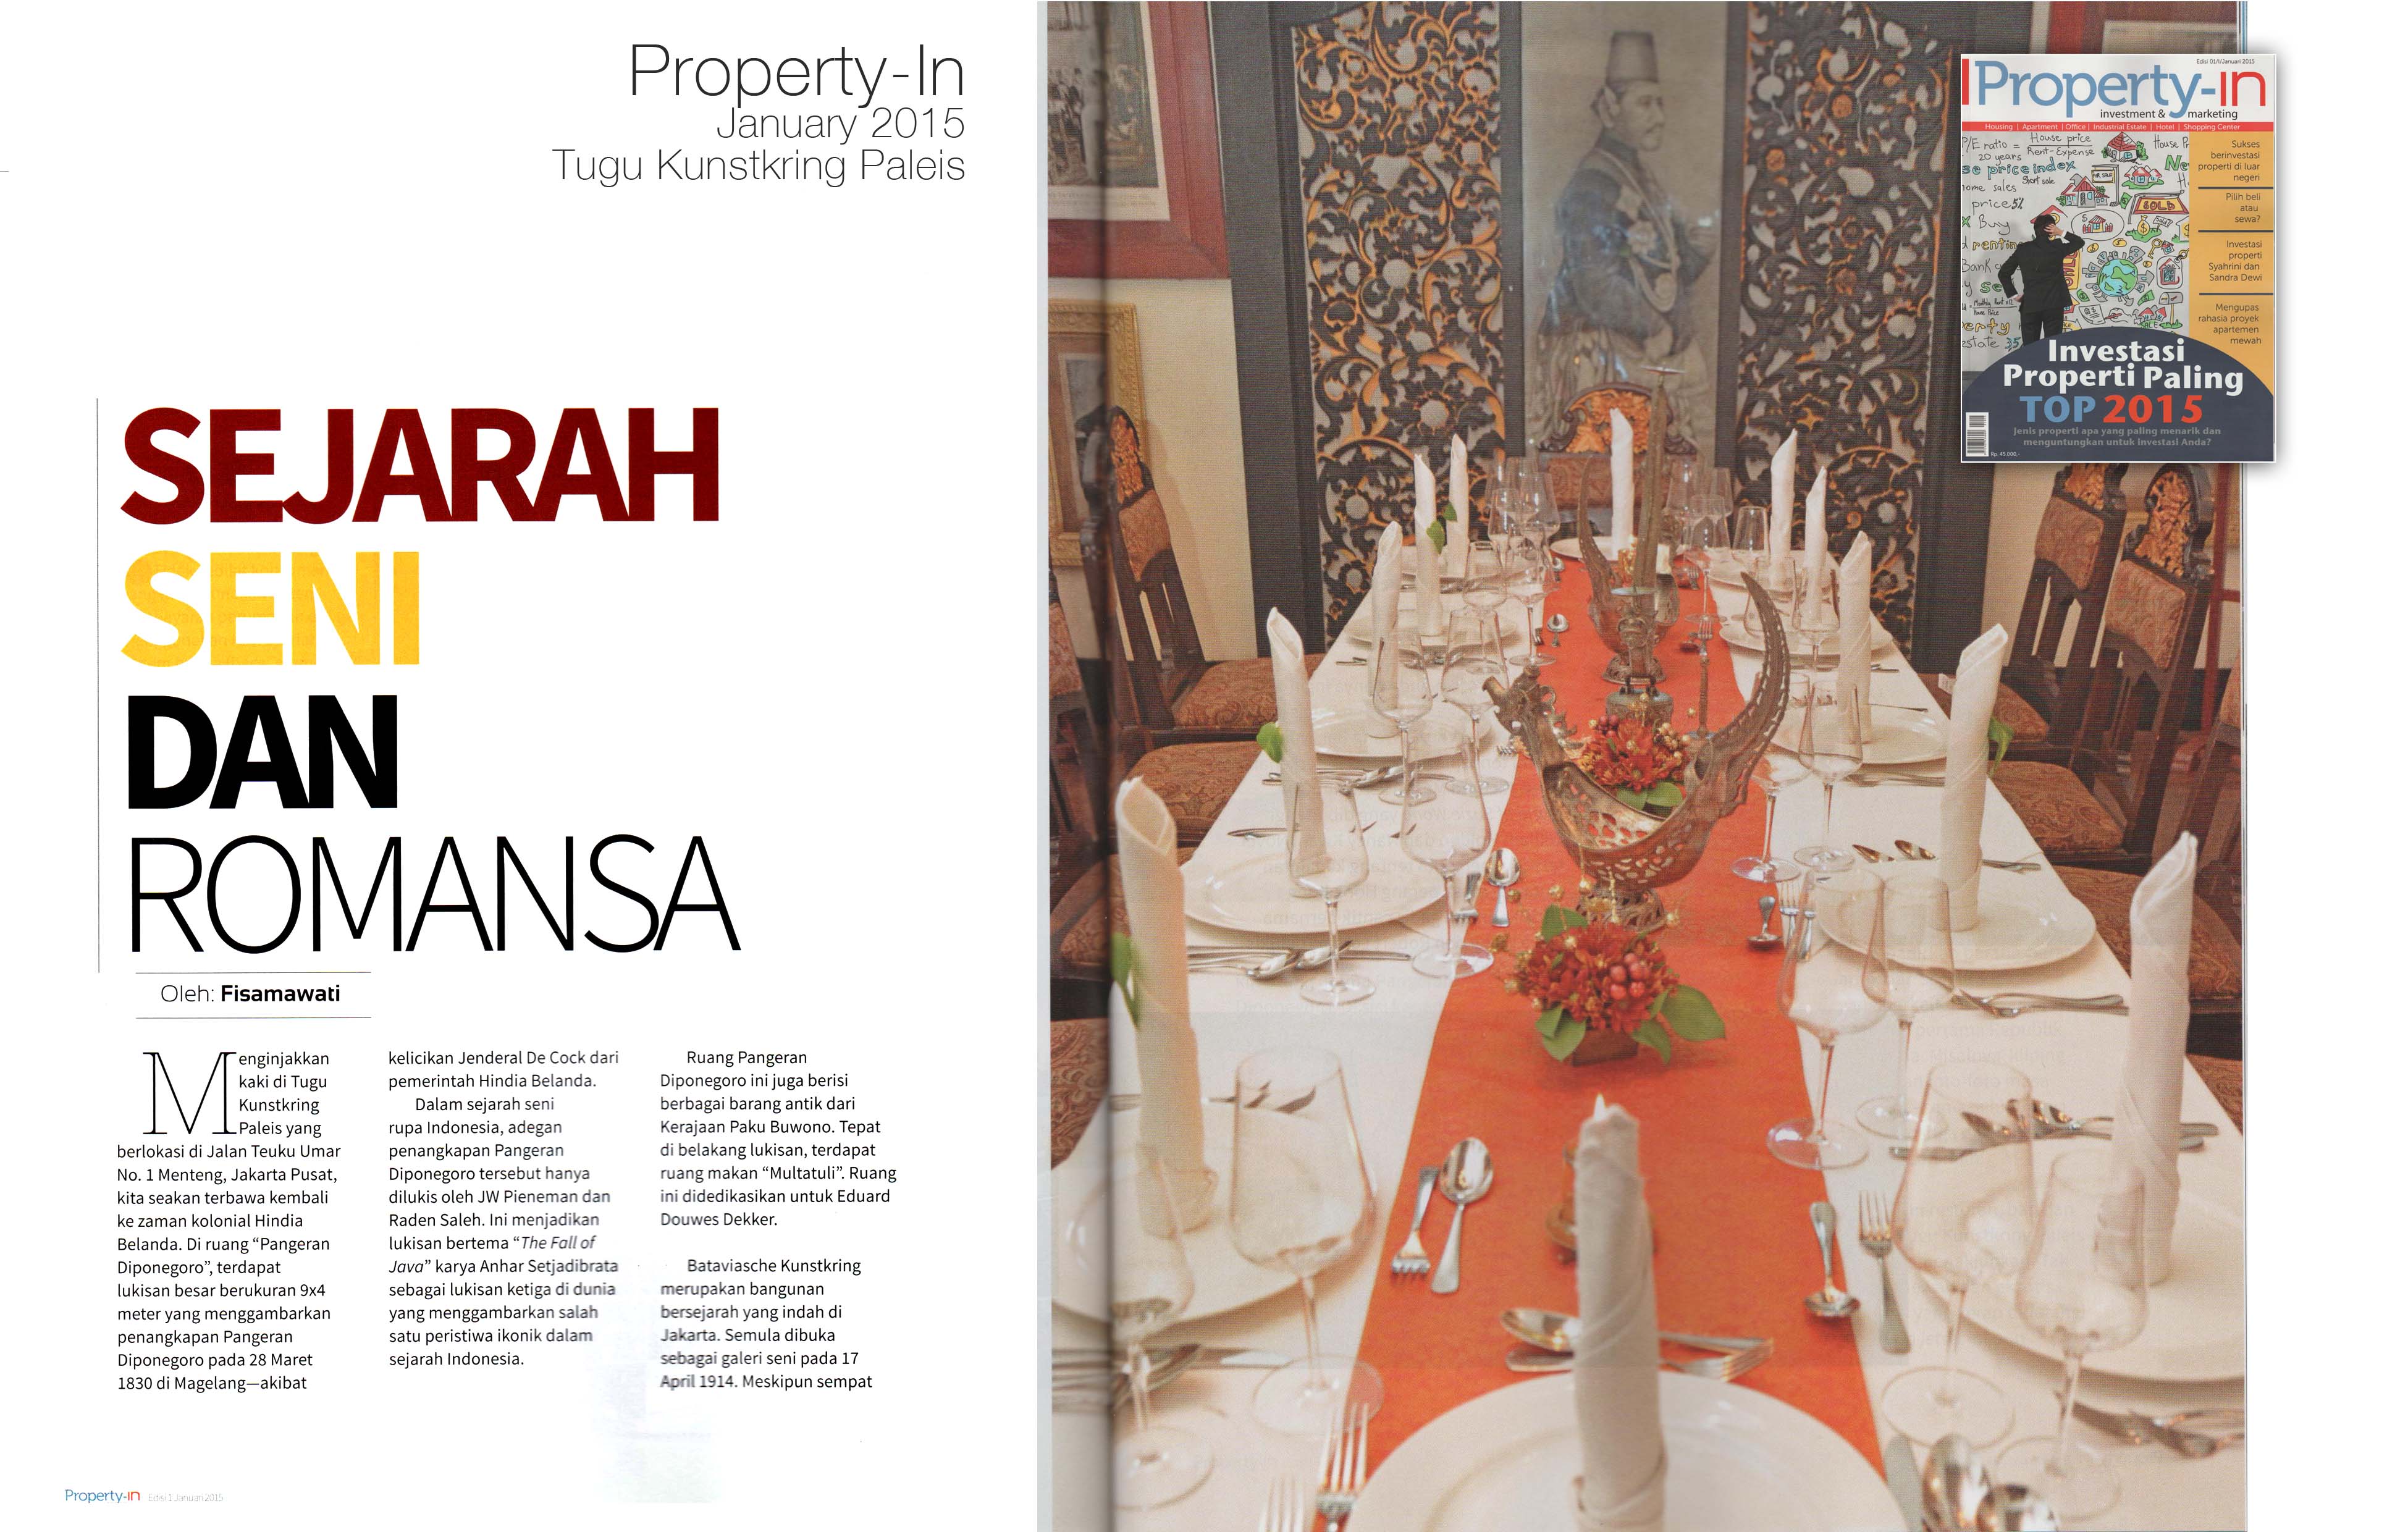 property-in magazine january 2015 - sejarah seni dan romansa